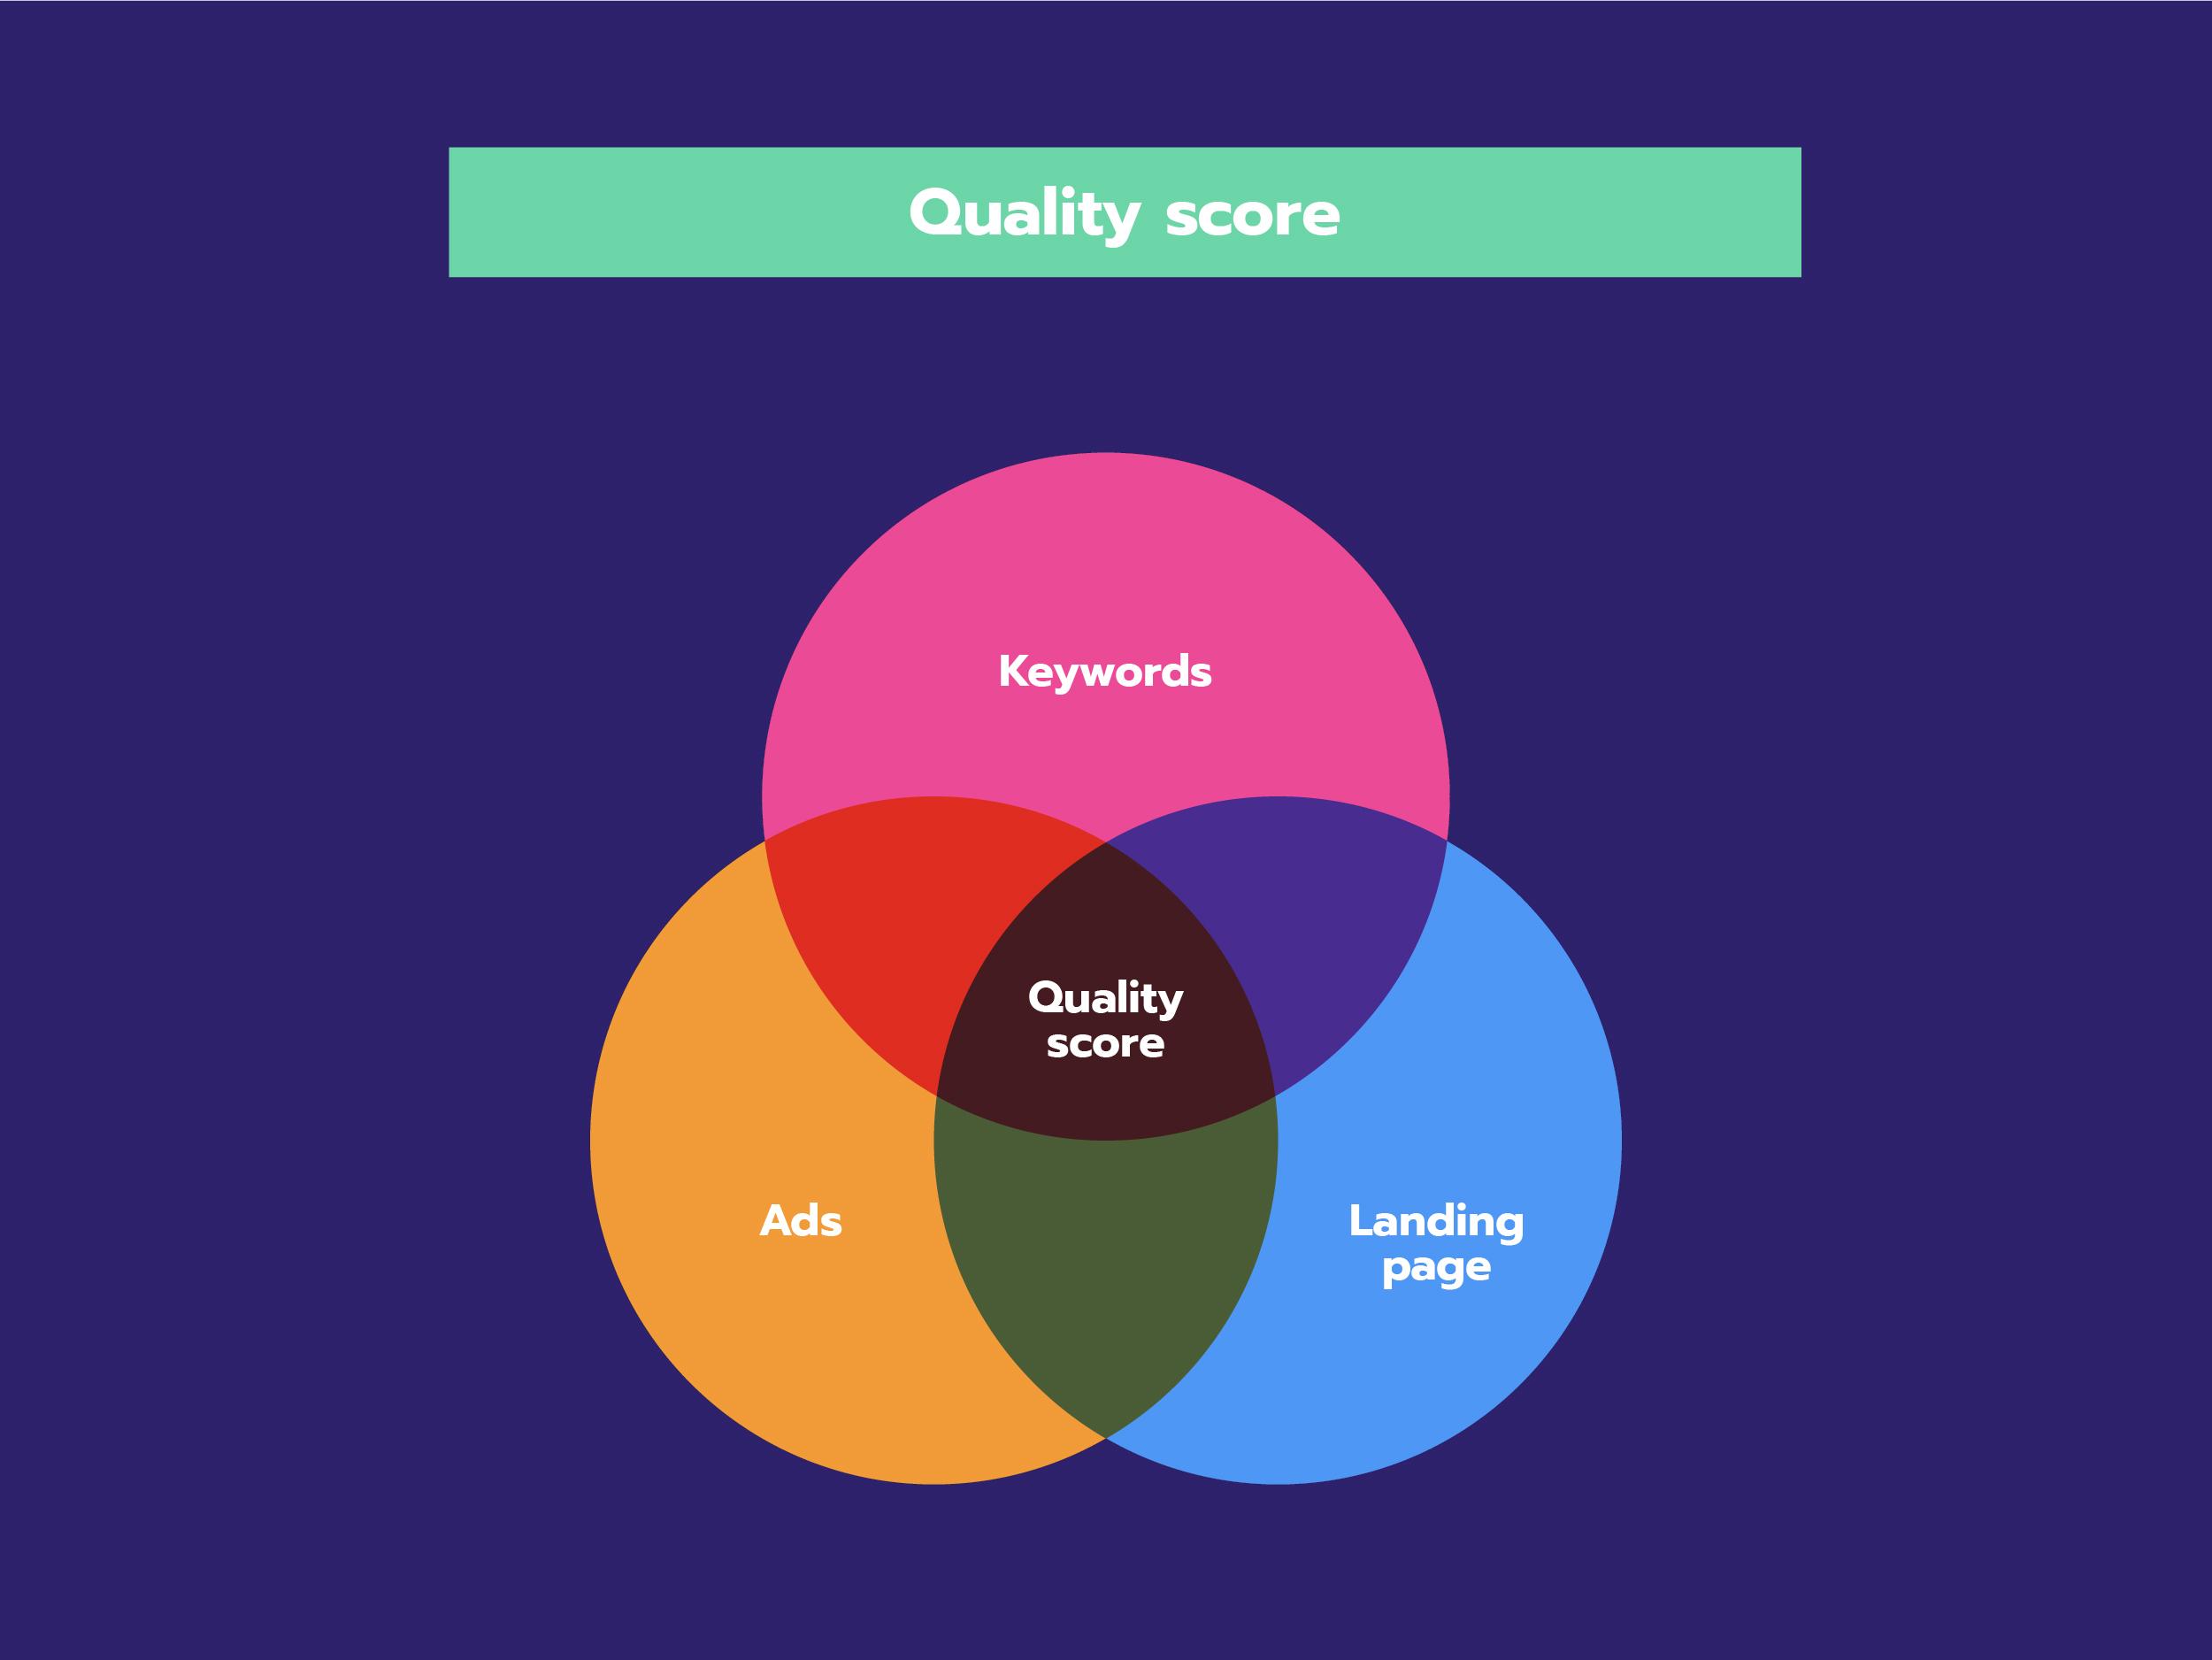 Elements of quality score